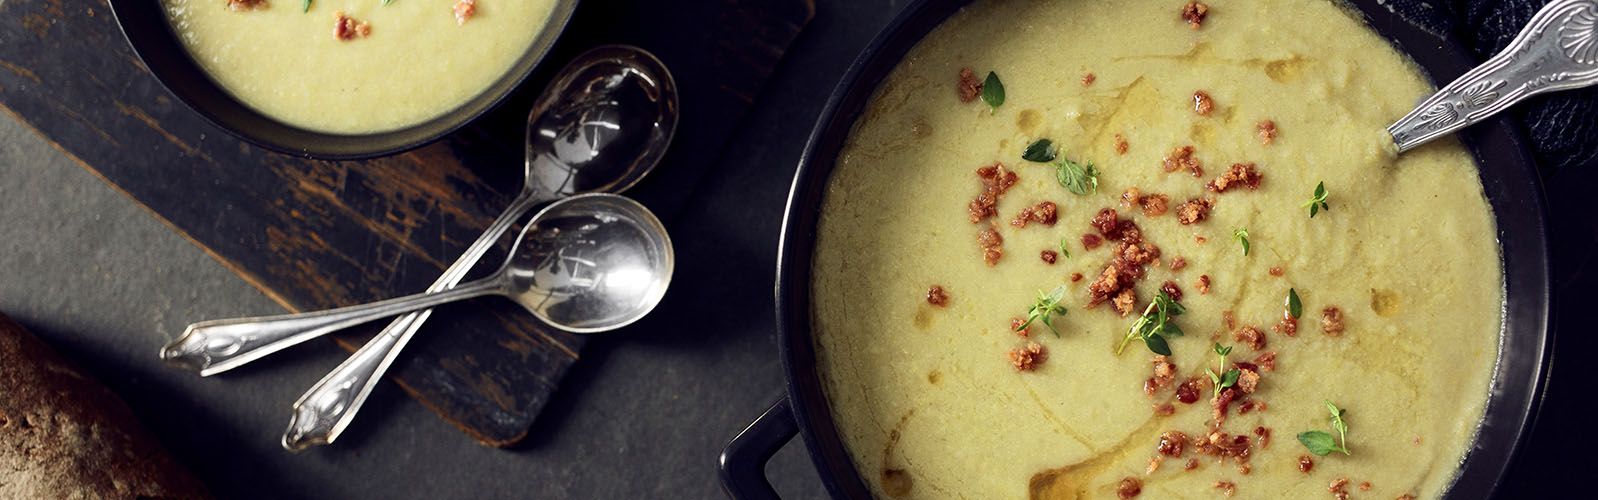 Artichoke, leek and potato soup